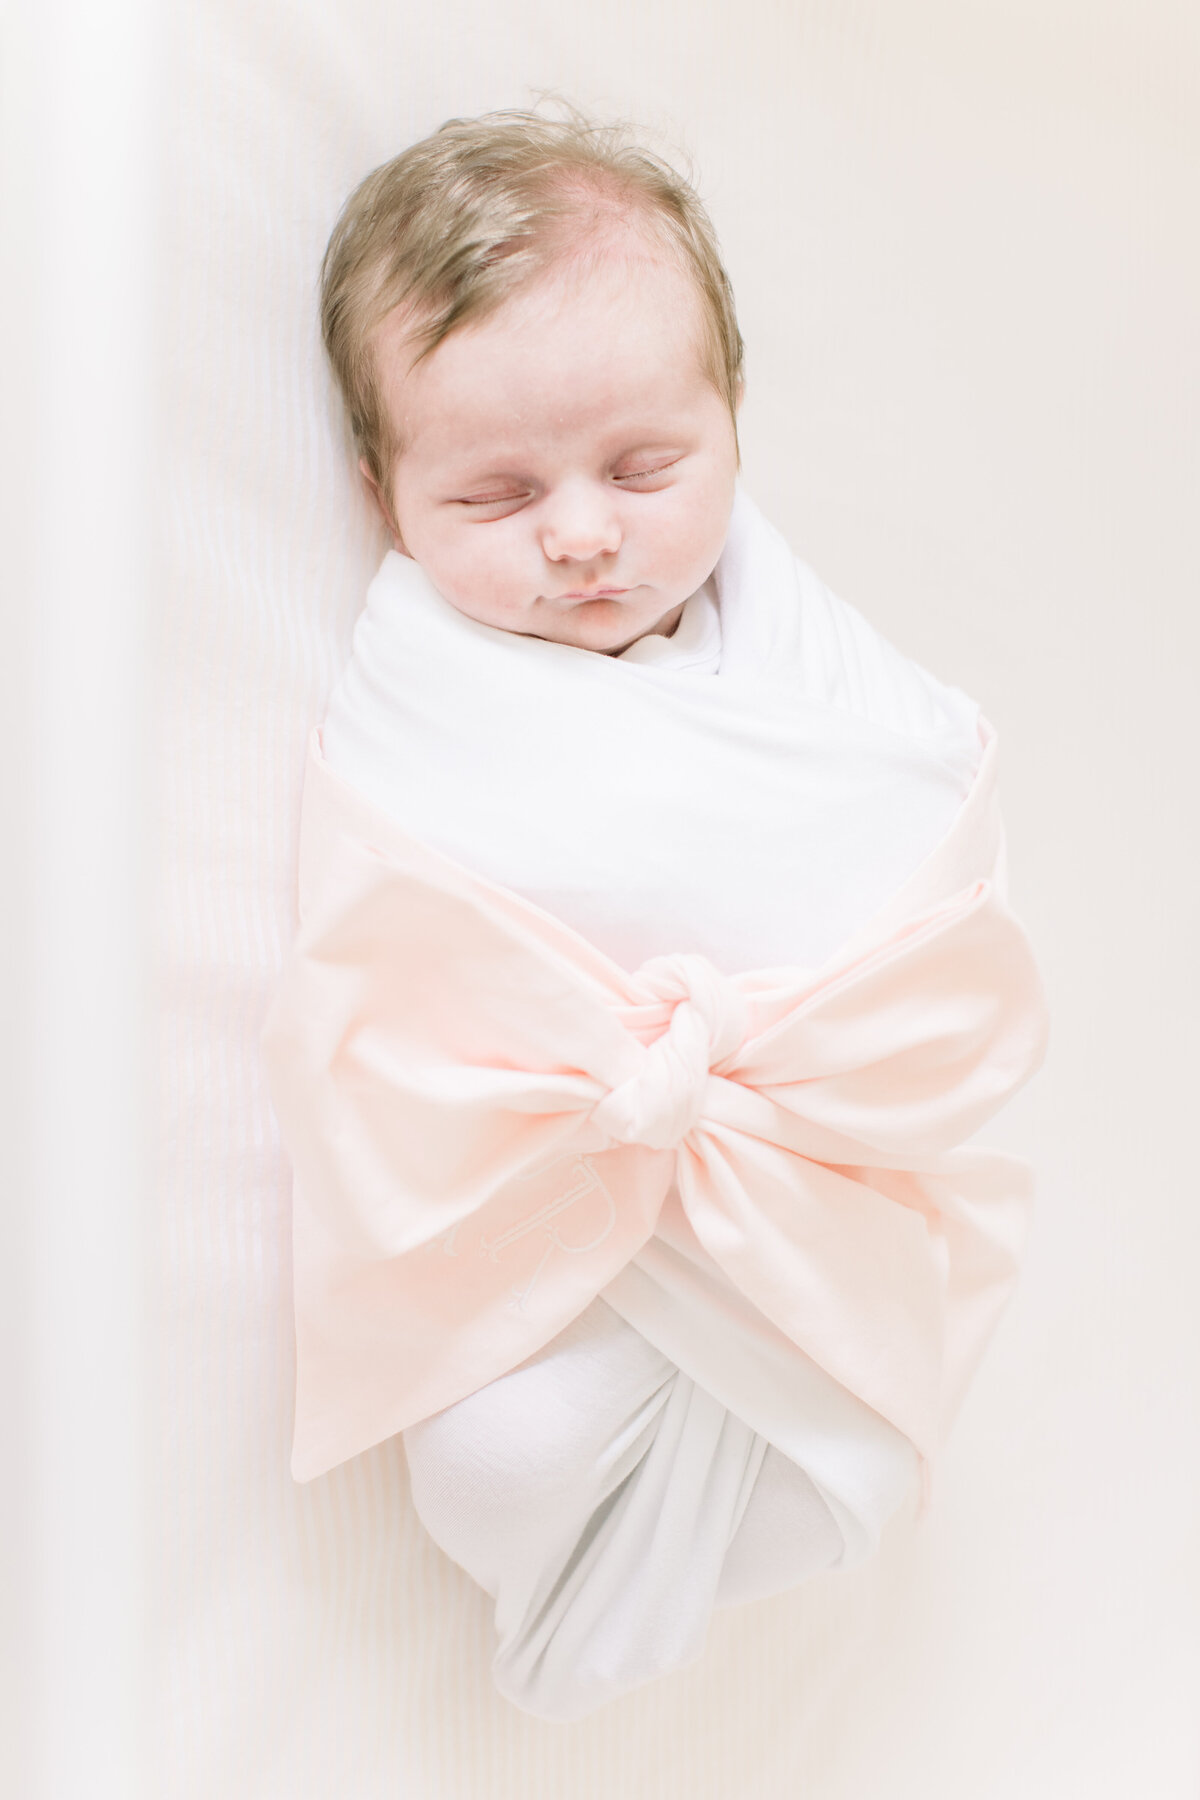 Baby Amelia  Ruzicka Newborn_-240